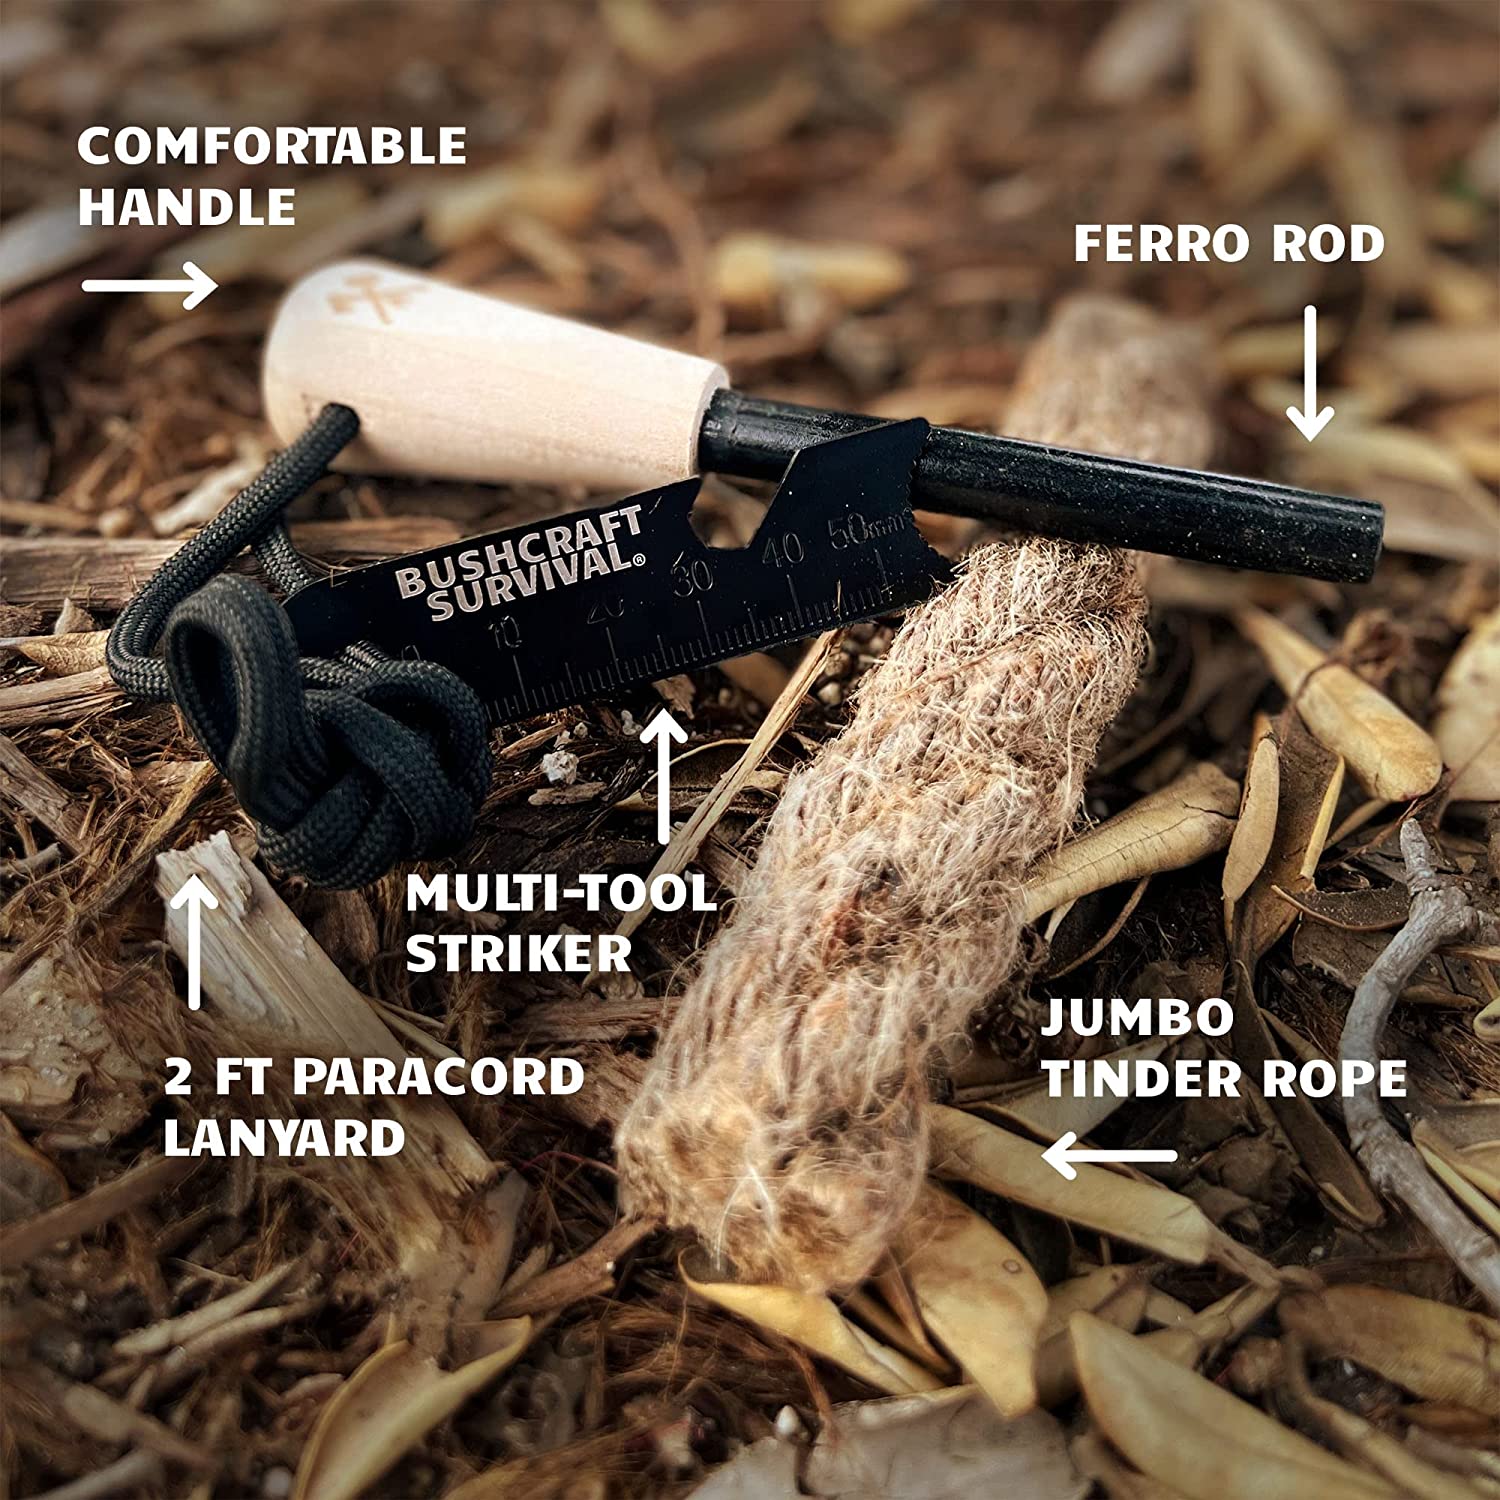 The Bushcraft Survival Ferro Rod Fire Starter Kit